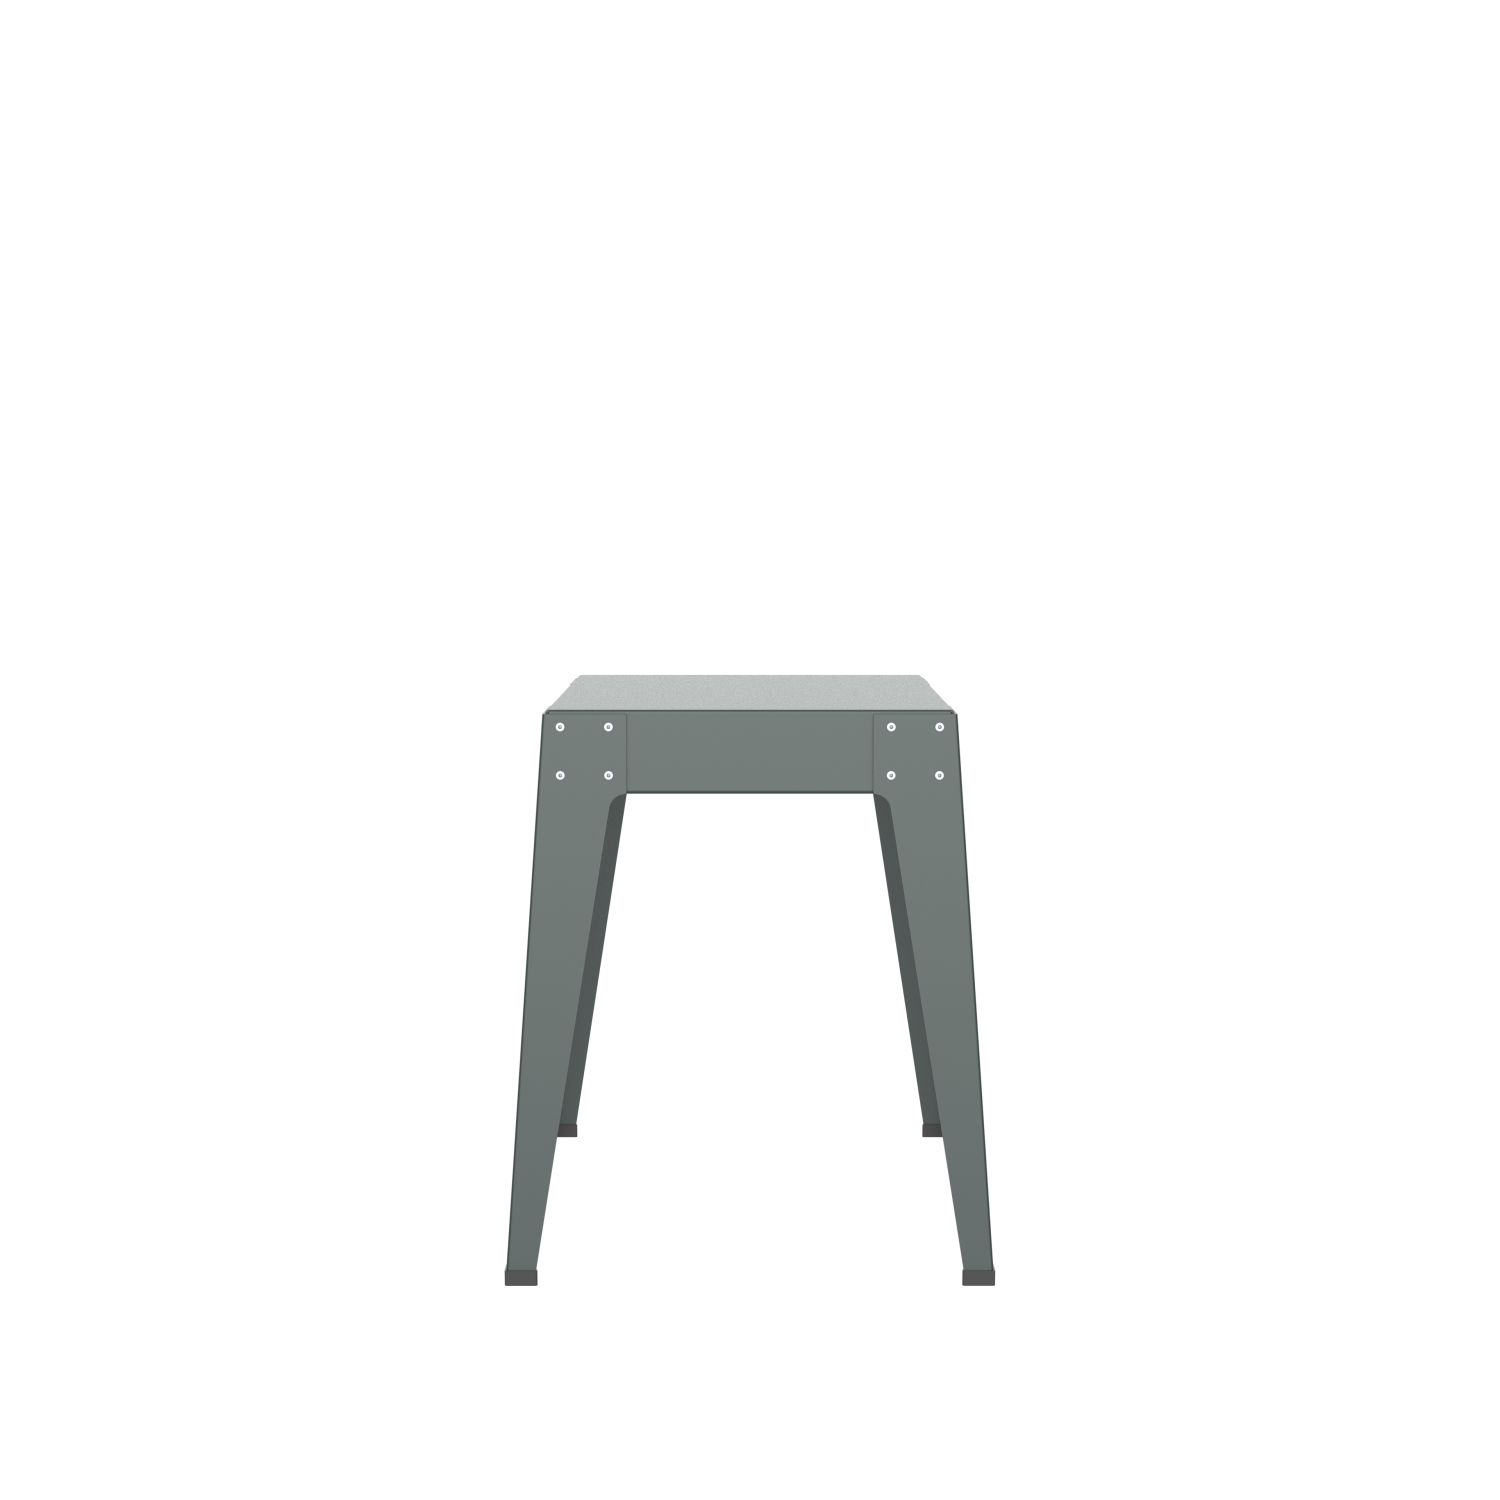 lensvelt piet hein eek aluminium series stool black green ral6012 hard leg ends